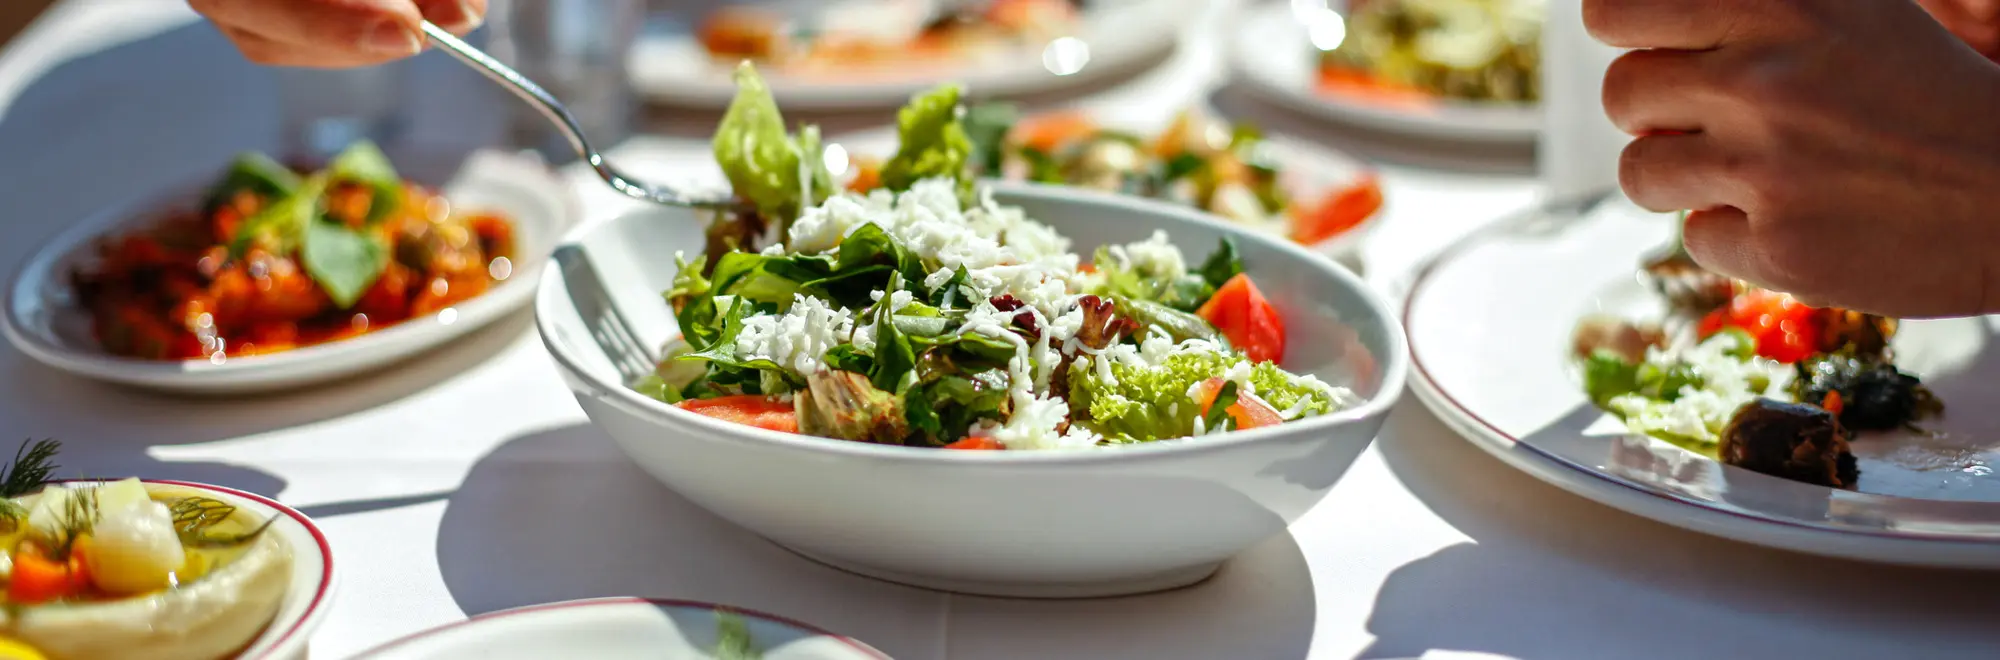 6 benefits of the Mediterranean diet that you hadn’t heard about